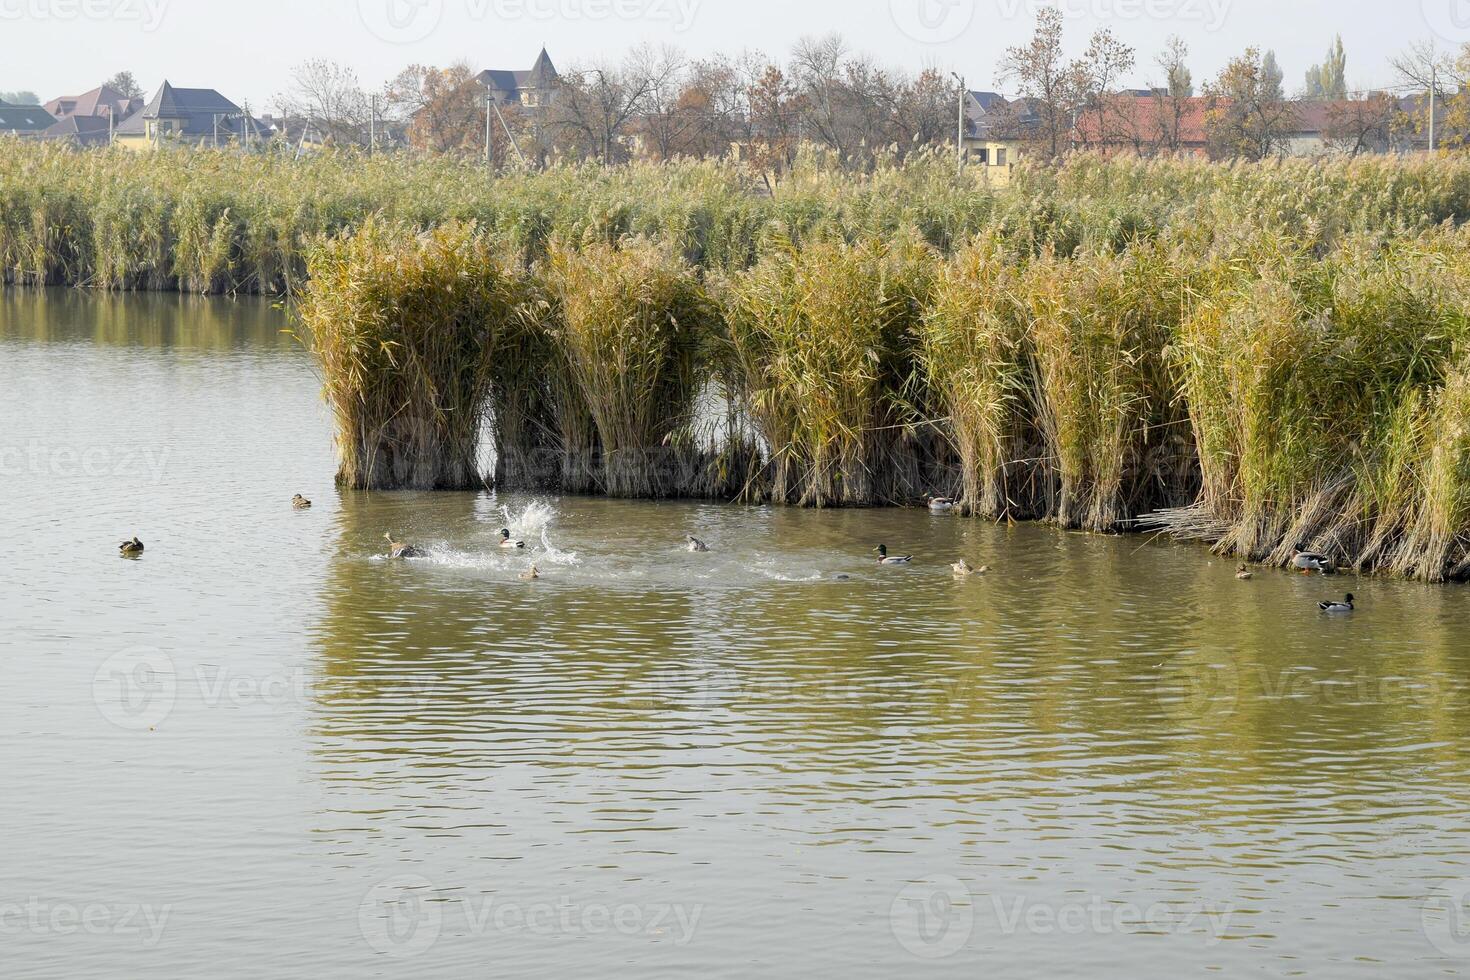 Ducks swimming in the pond. Wild mallard duck. Drakes and females photo